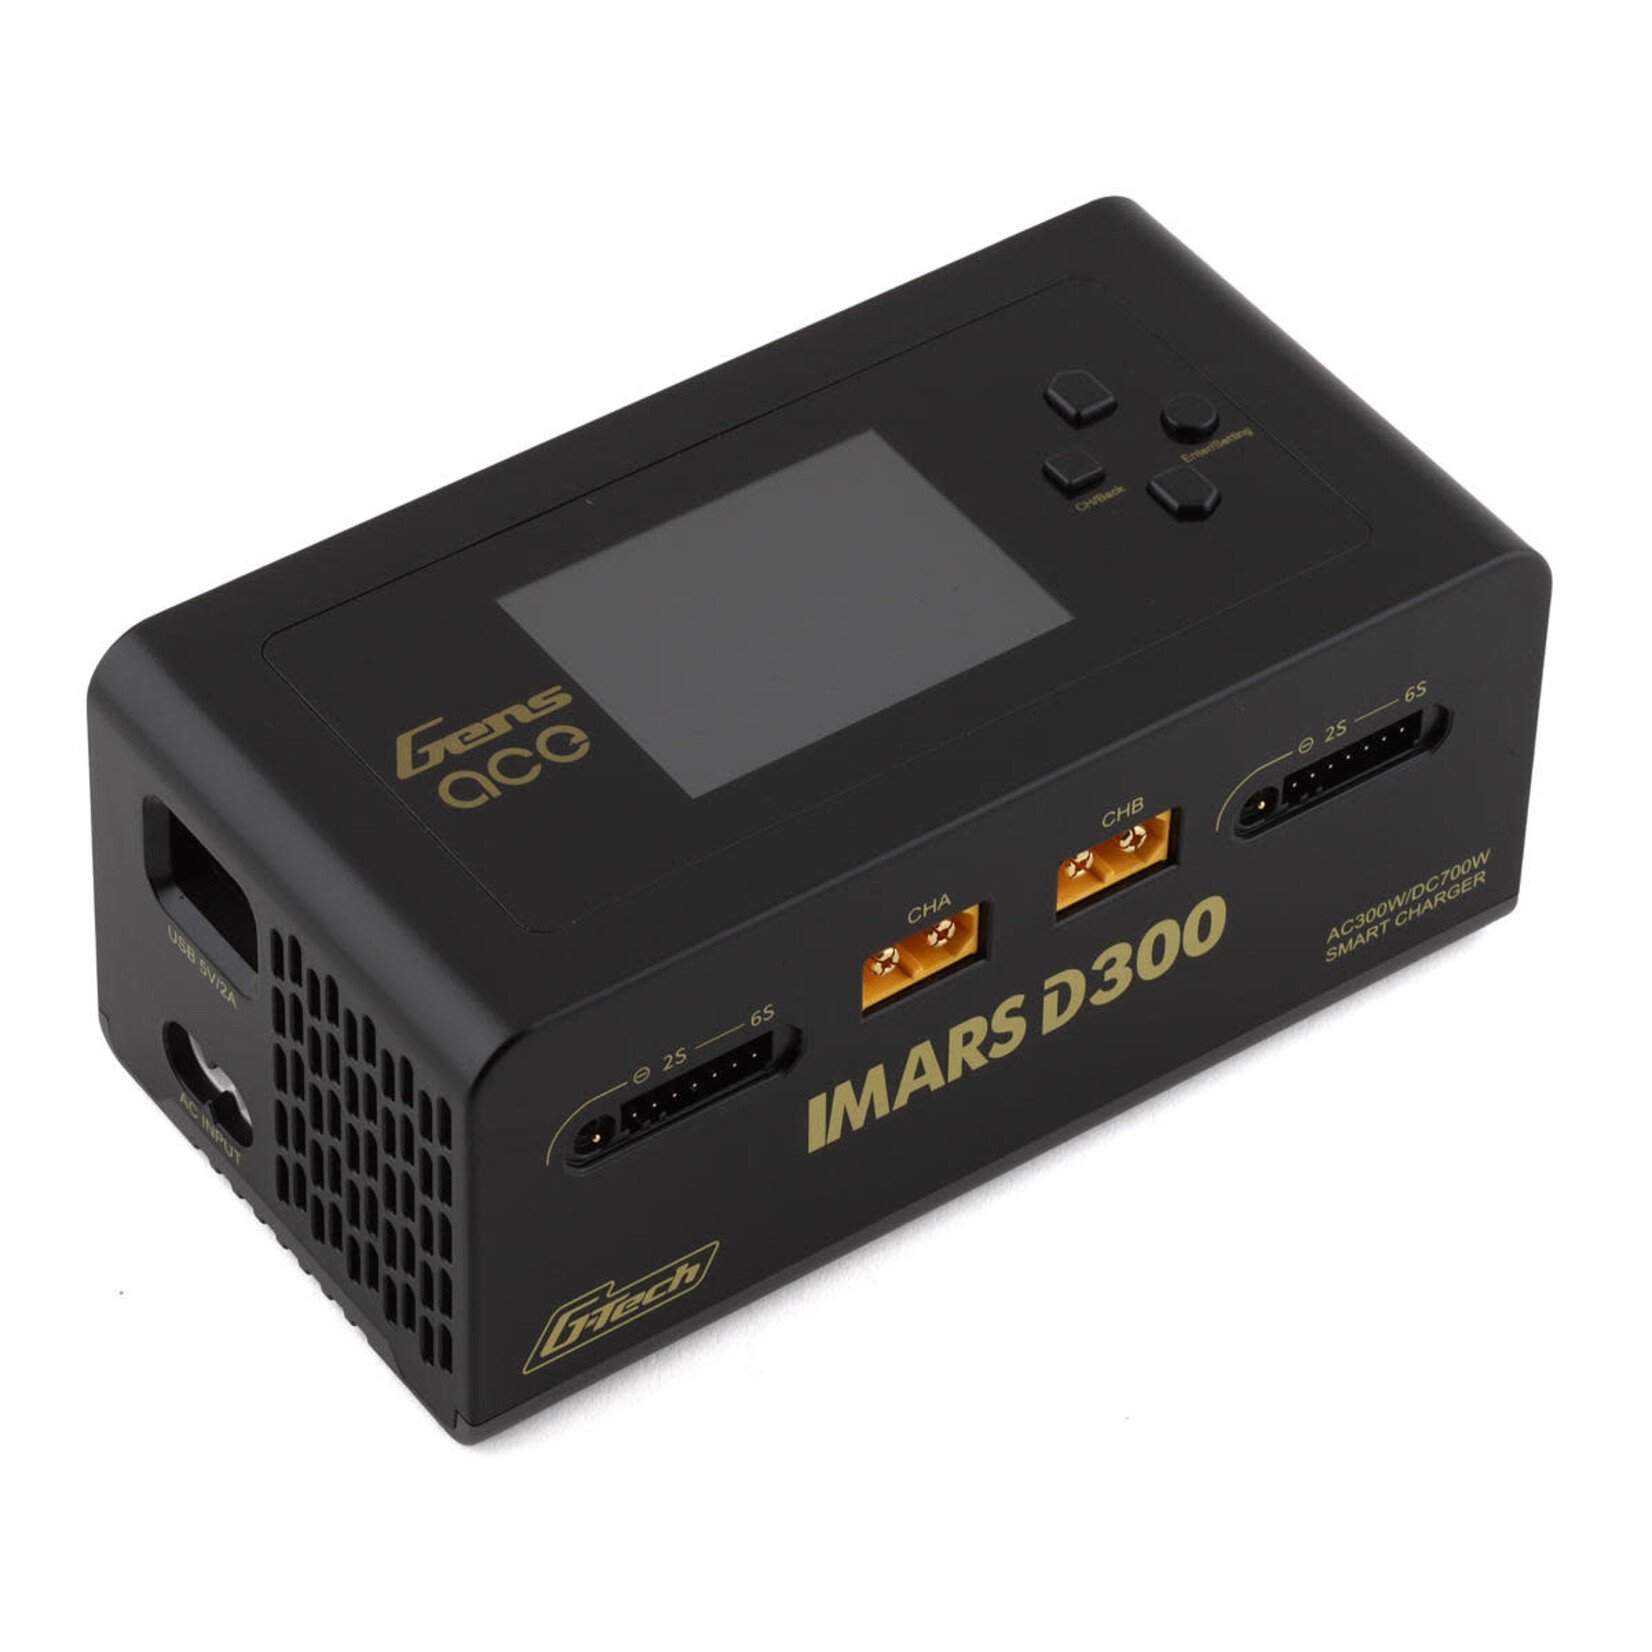 Gens Ace Gens Ace Imars D300 G-Tech Smart Dual AC/DC Charger (6S/16A) (Black) (AC-300W) (DC-350W x2) #GEA300WD300-UB